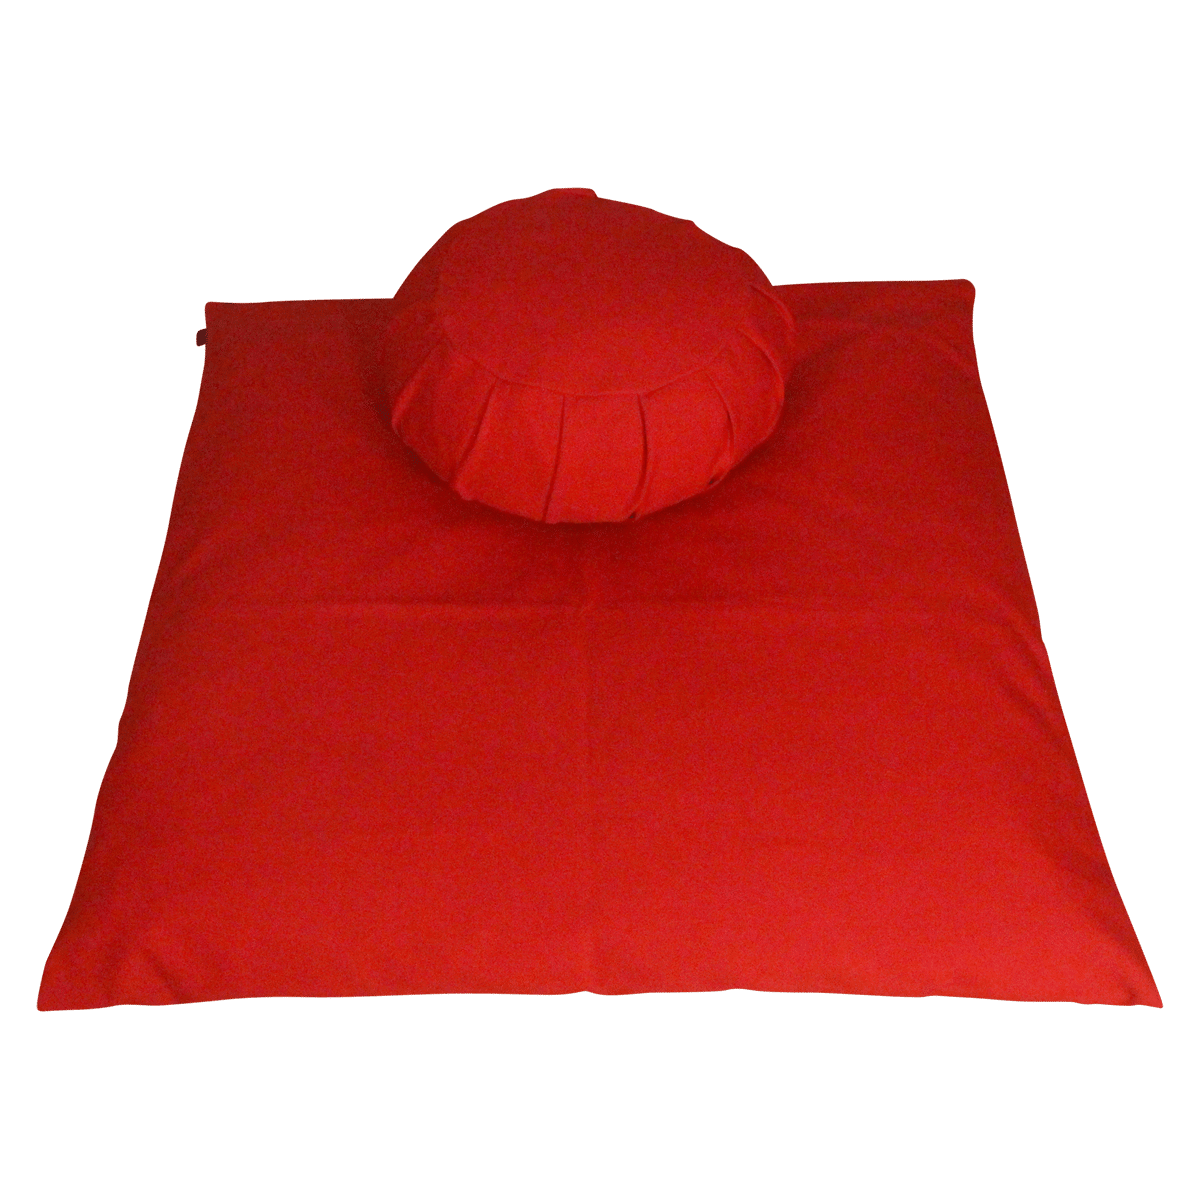 Zafu Meditation/Yoga Cushion with Carrying Handle Red 